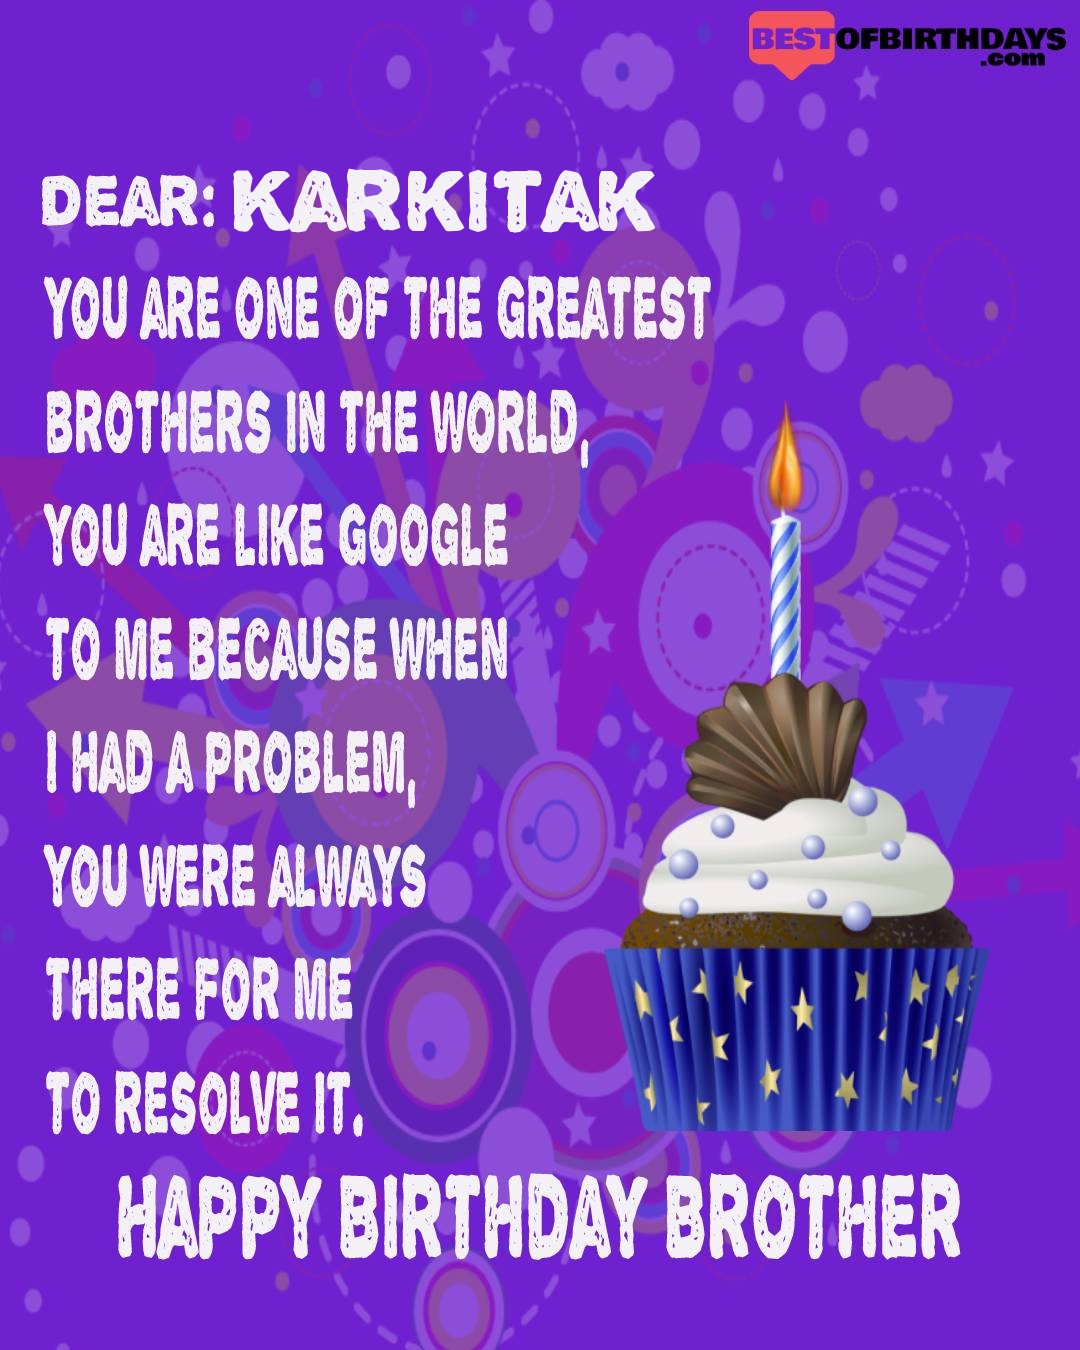 Happy birthday karkitak bhai brother bro